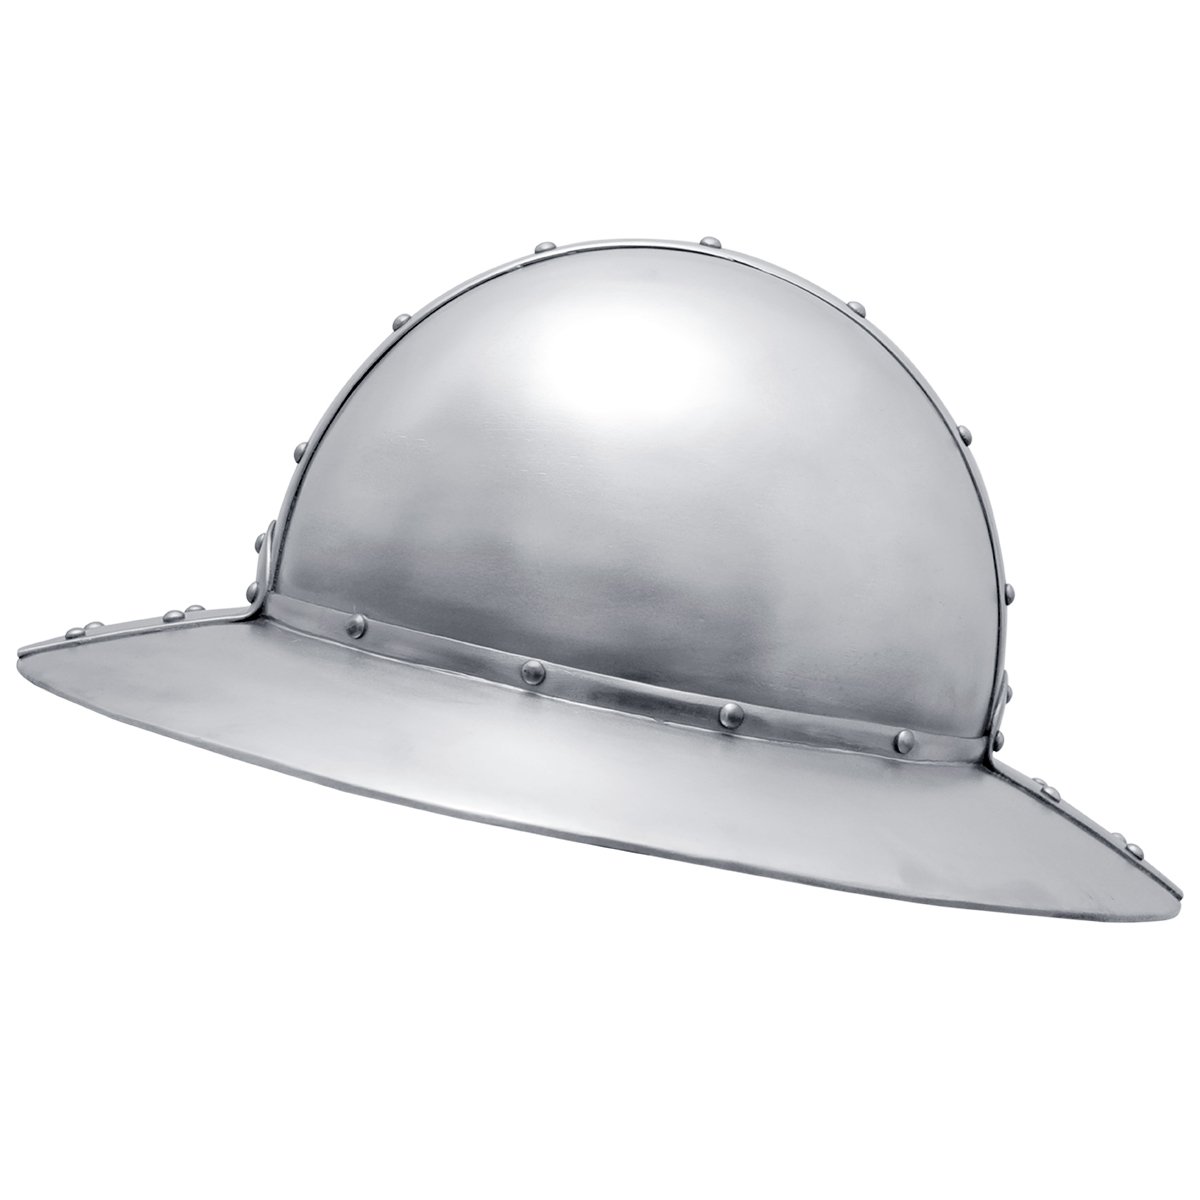 XIII th C Kettle Hat helmet, Size L